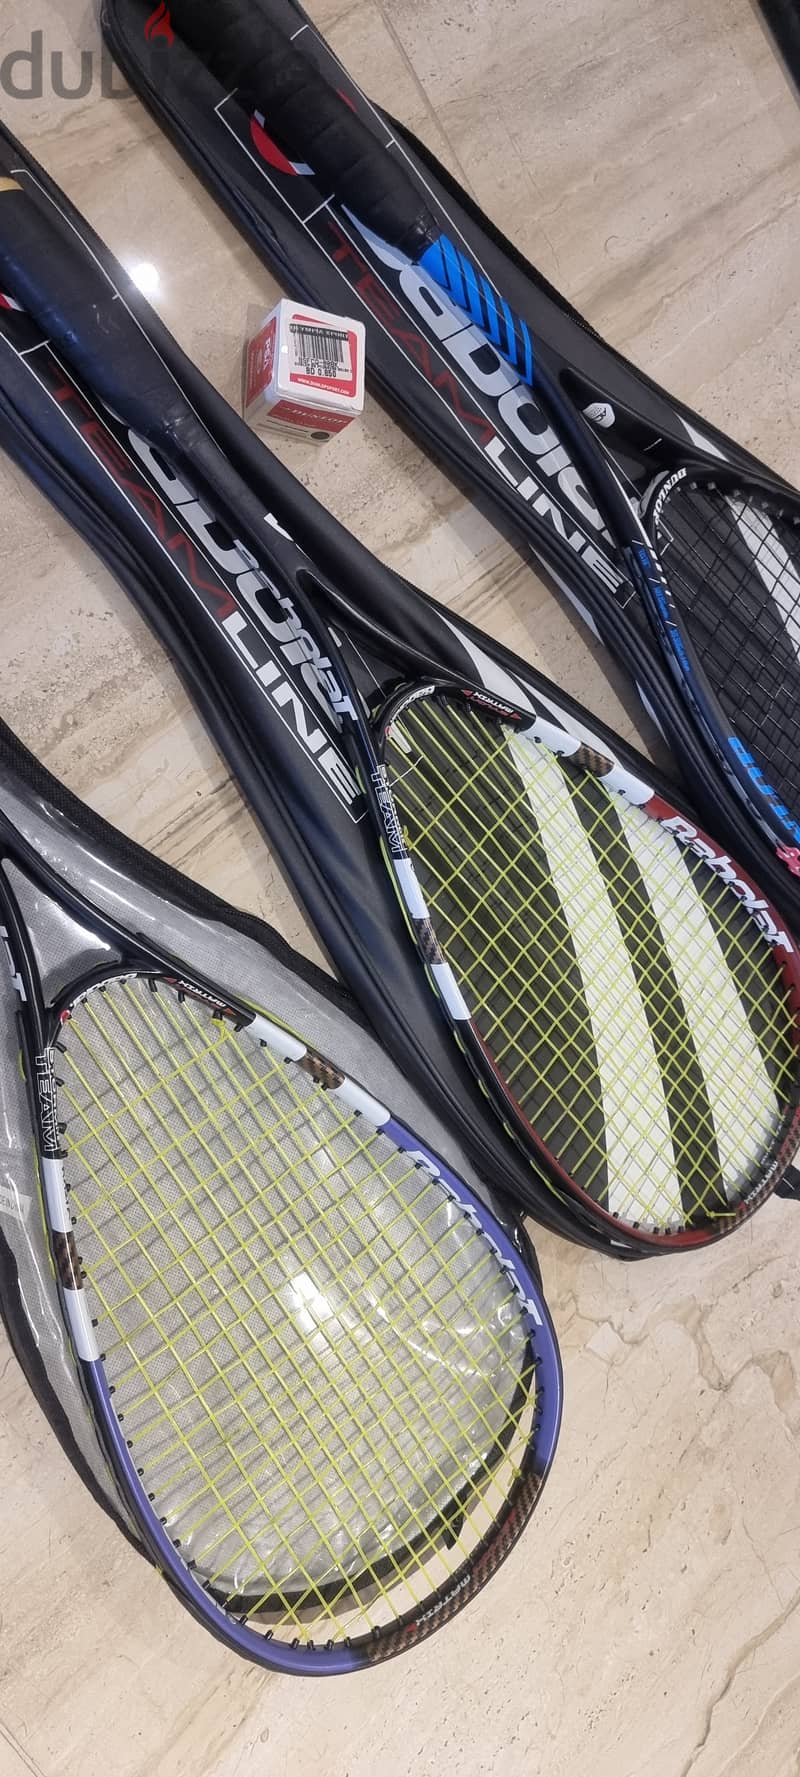 3 squash racquets, Babolat and Dunlop Carbon 2